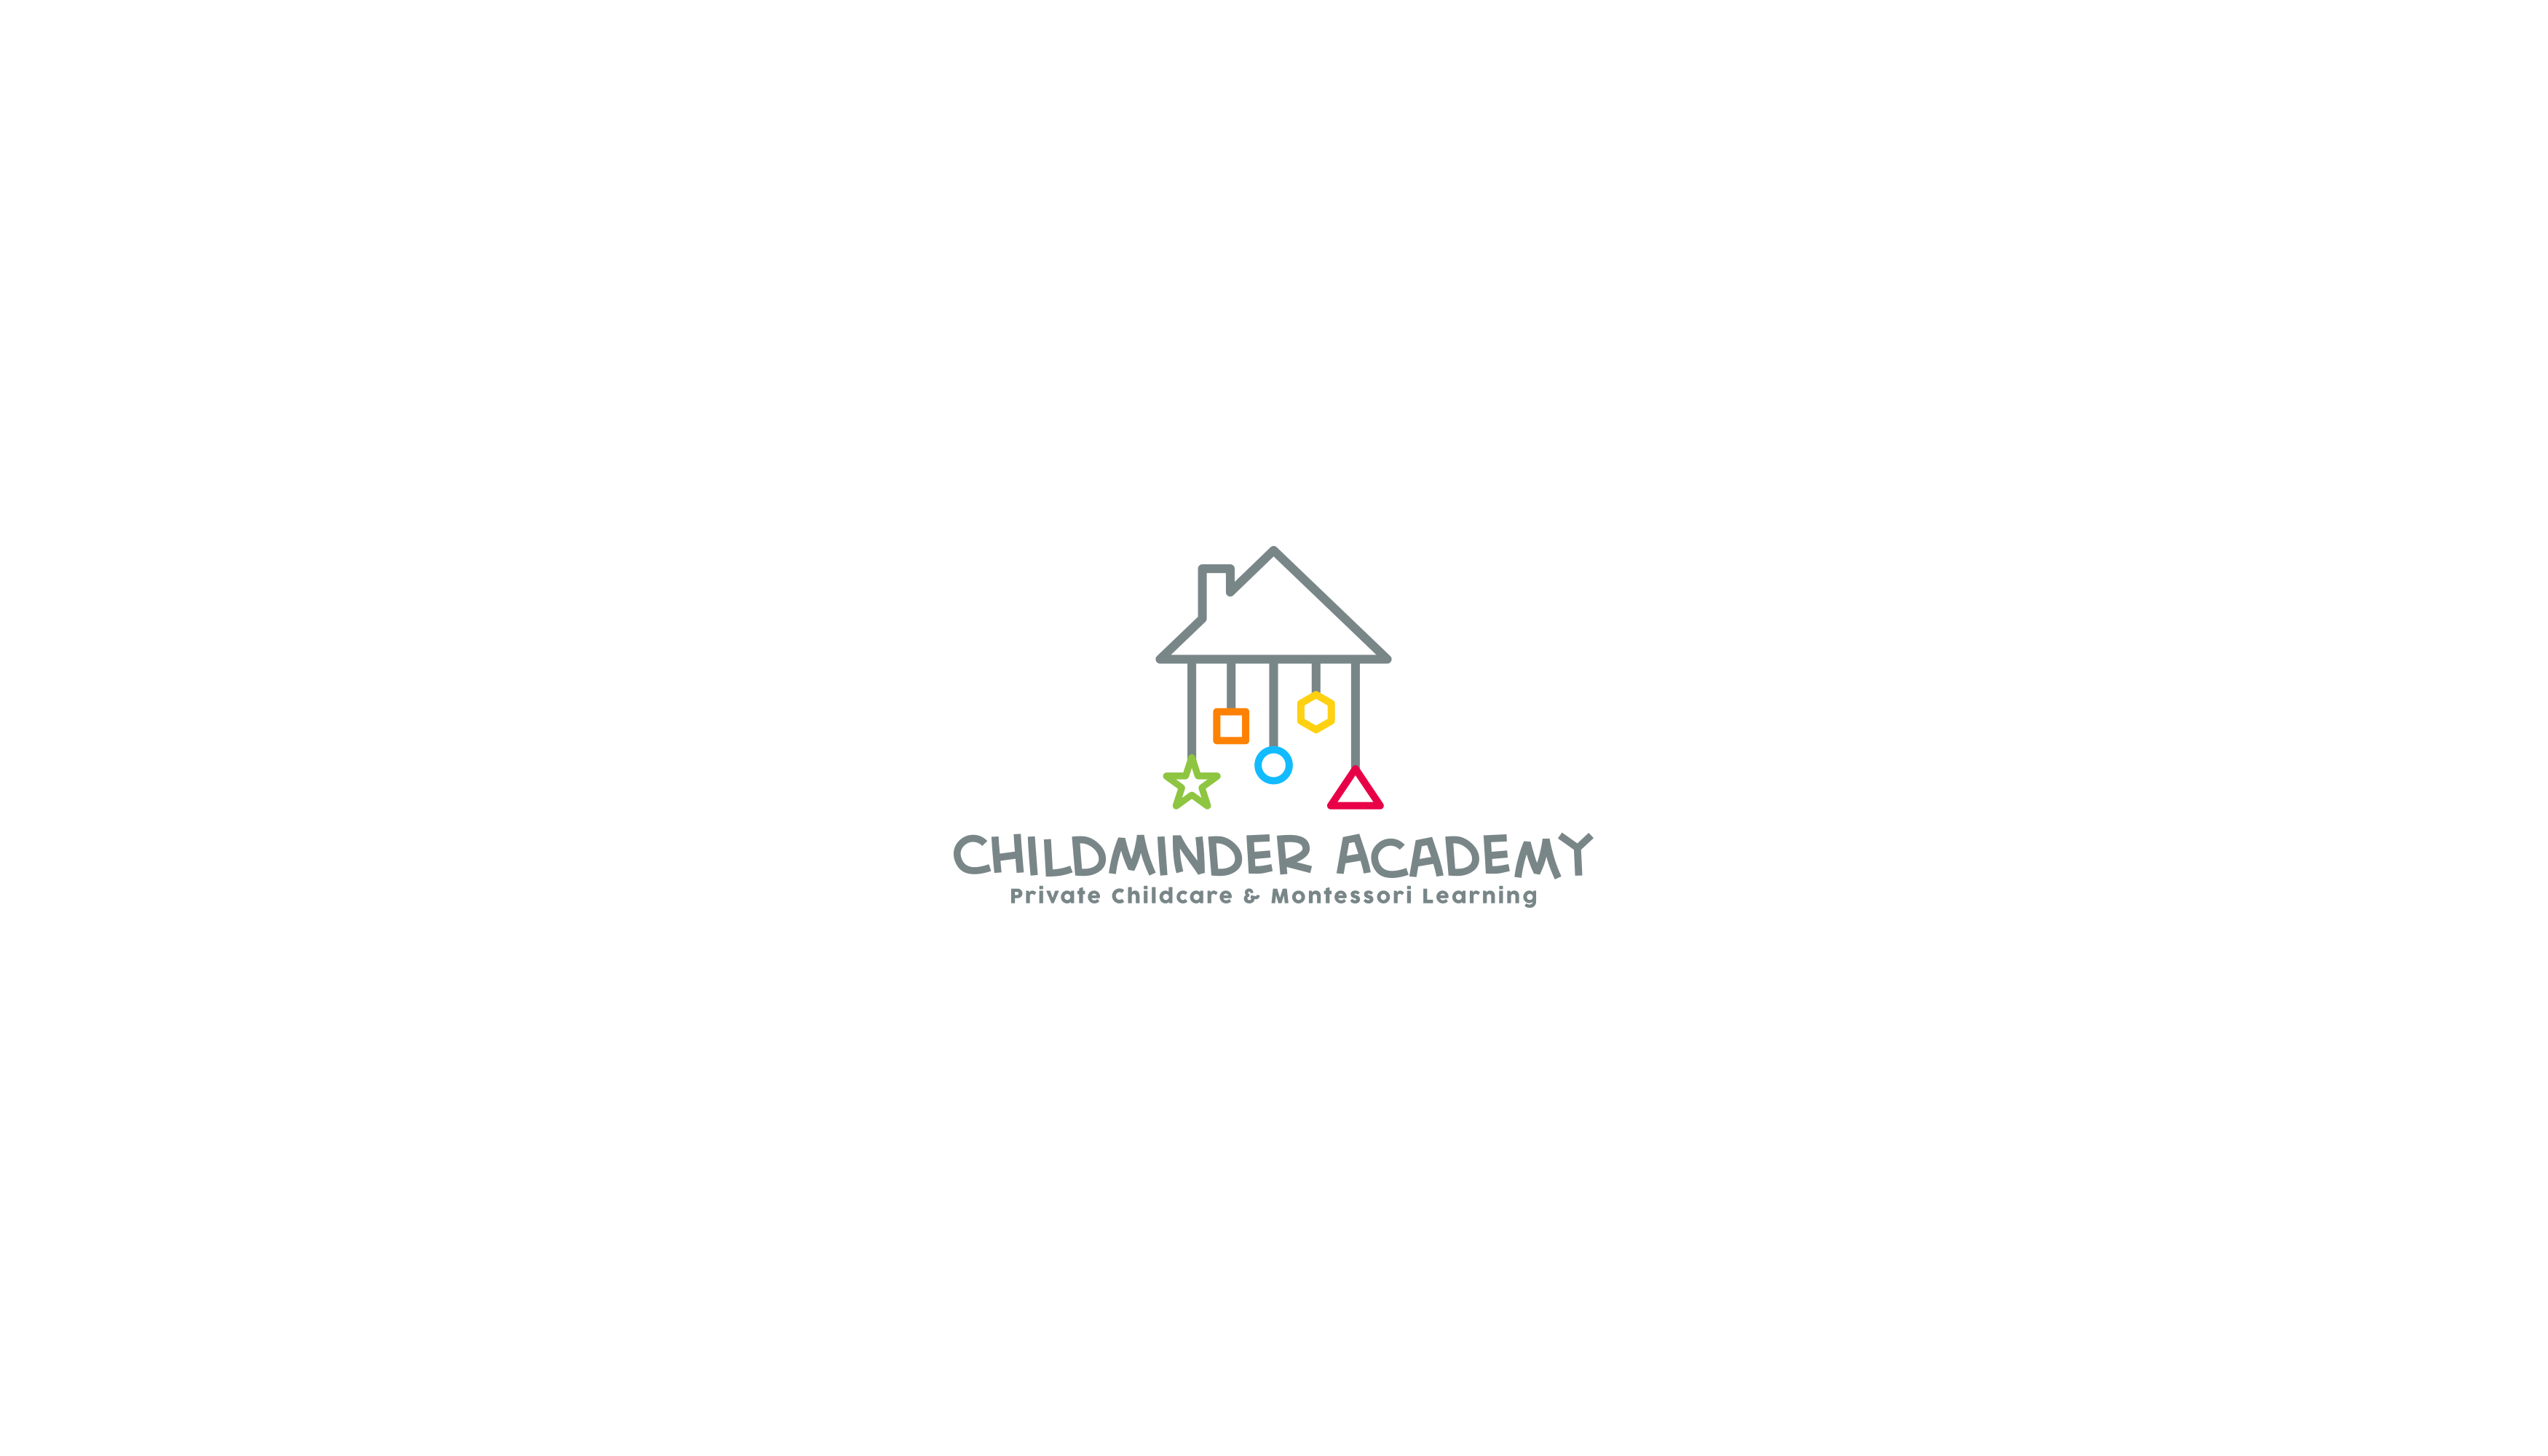 ChildMinder Academy Design #5